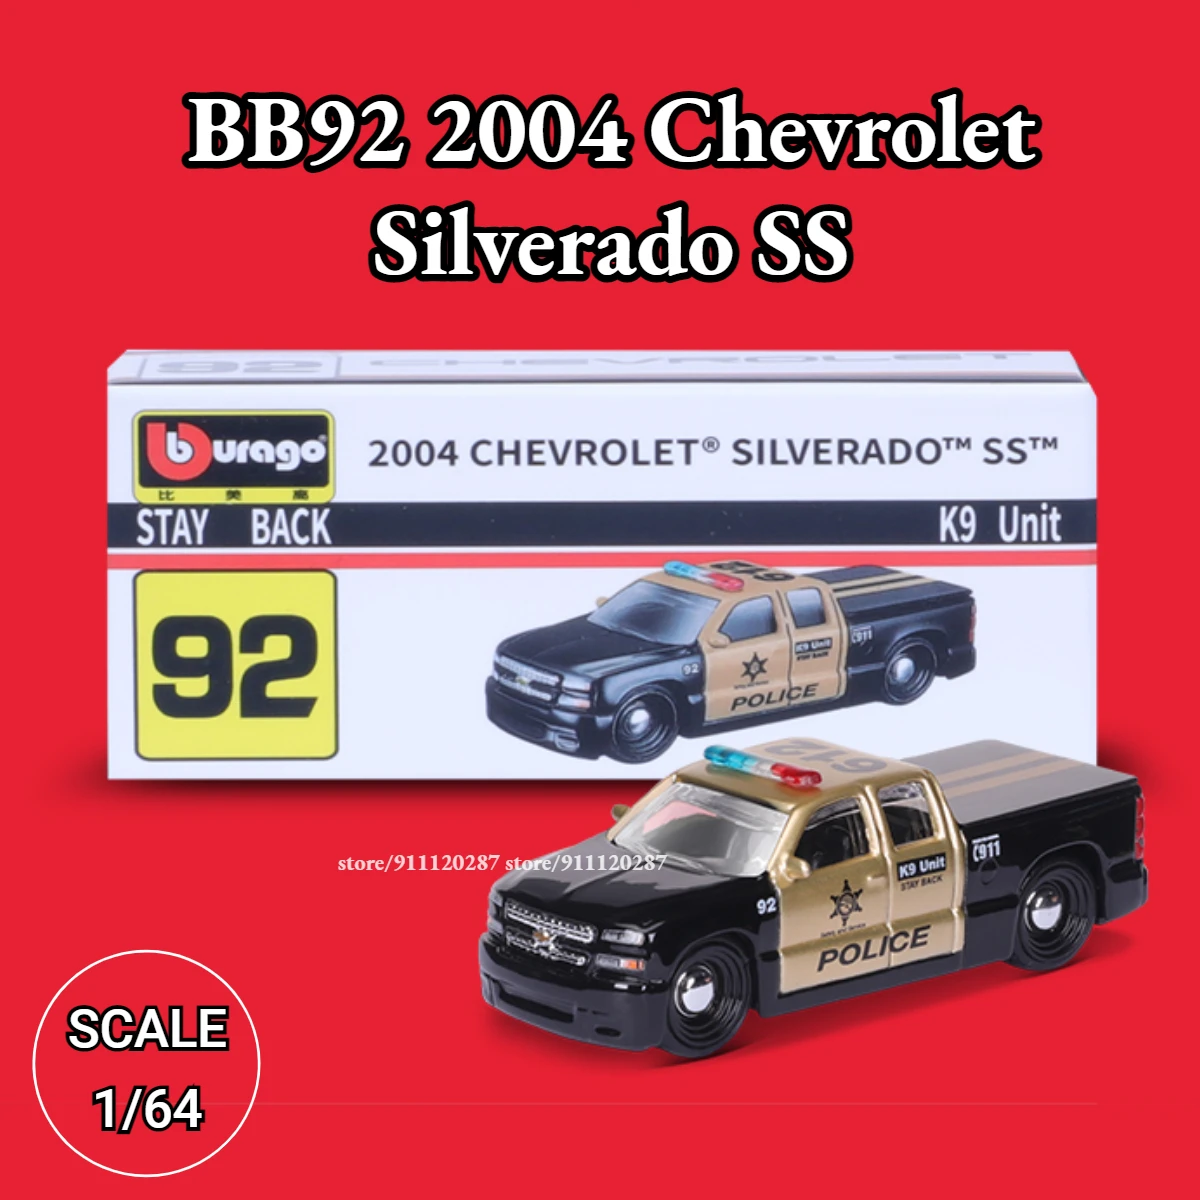 

Bburago 1:64 Mini Car Model, BB92 2004 Chevrolet Silverado SS Scale Metal Diecast Miniature Art Replica Vehicle Collection Toy